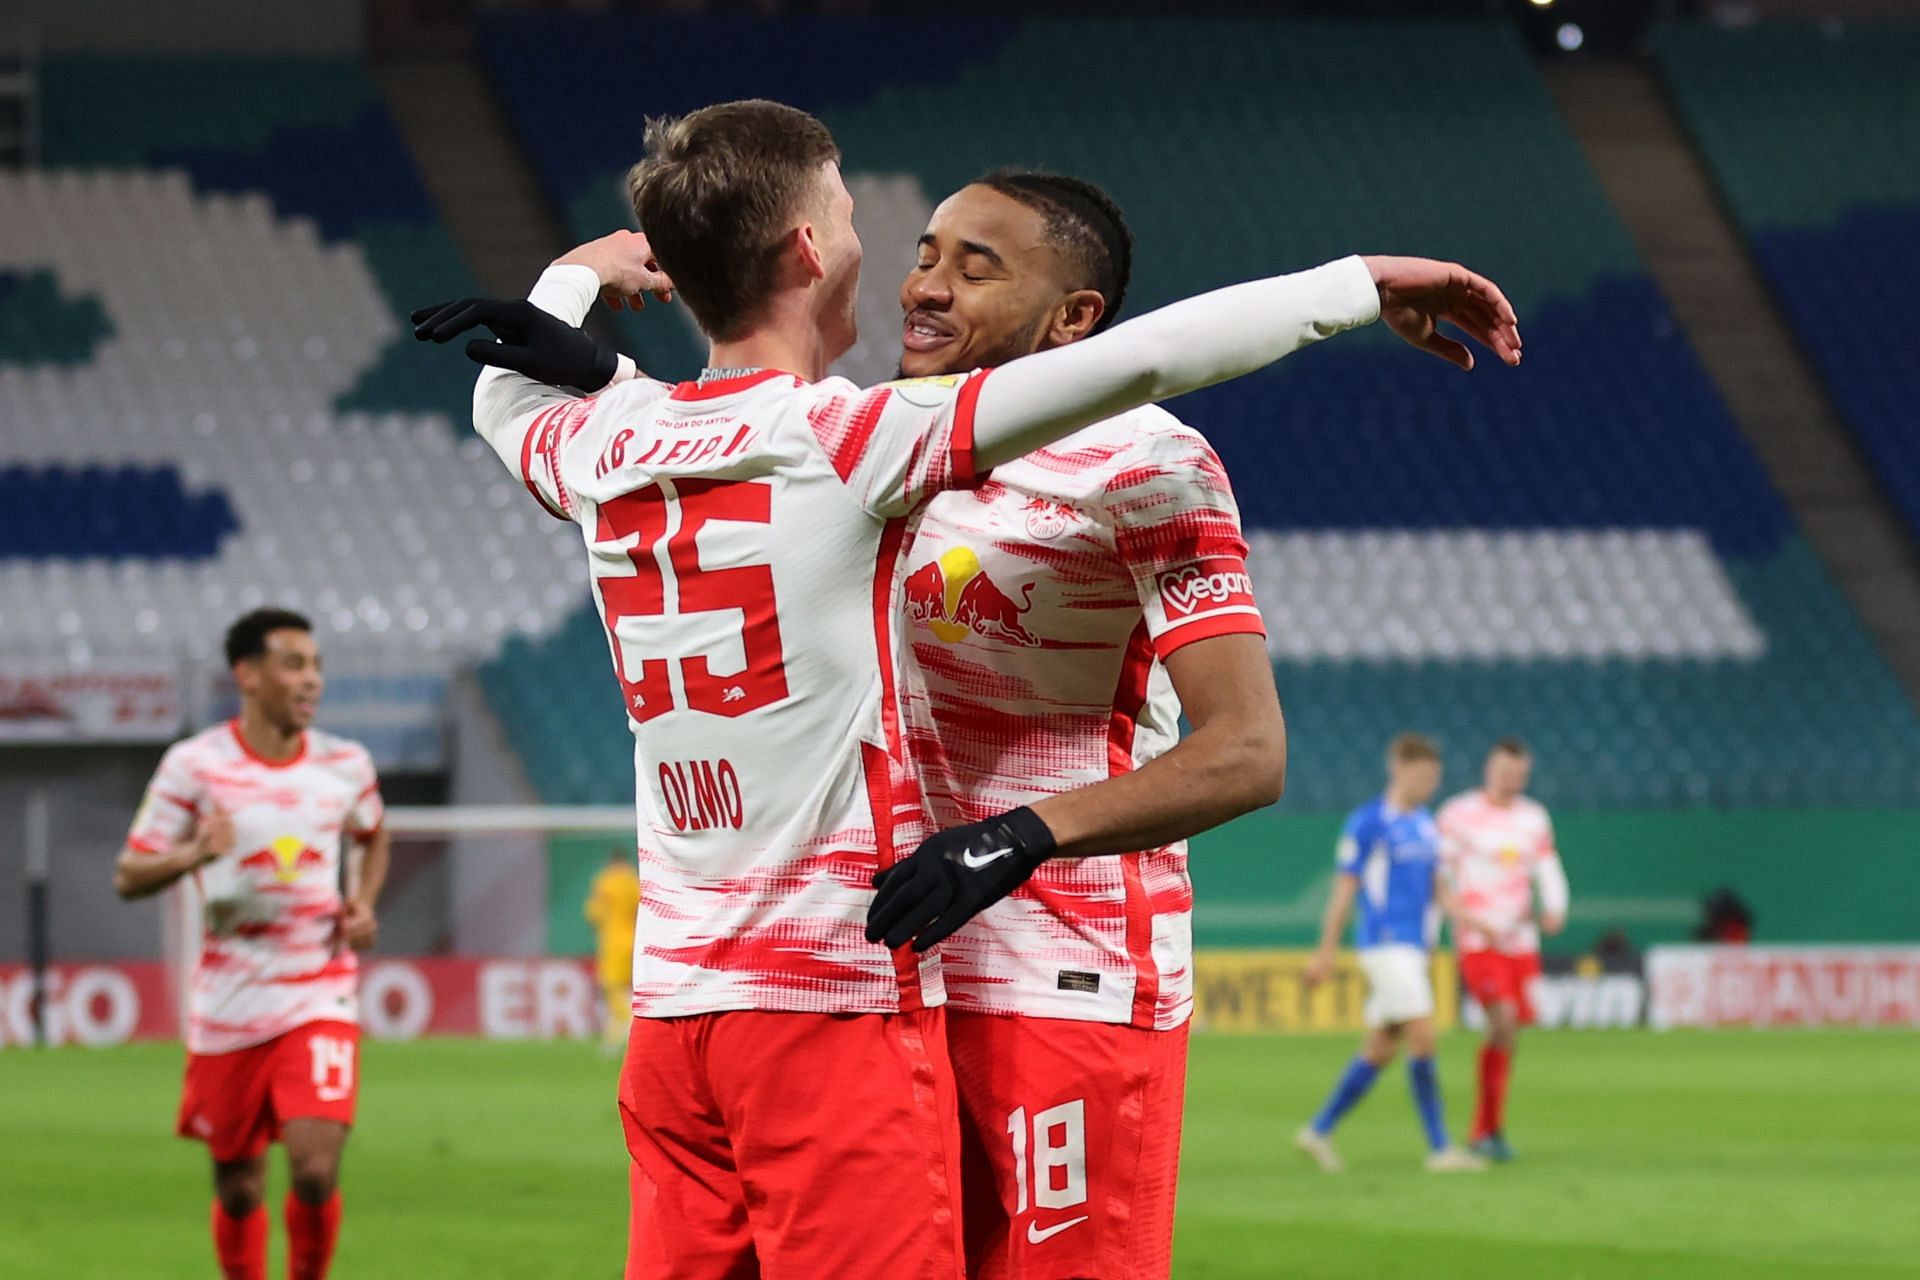 RB Leipzig play Koln on Friday